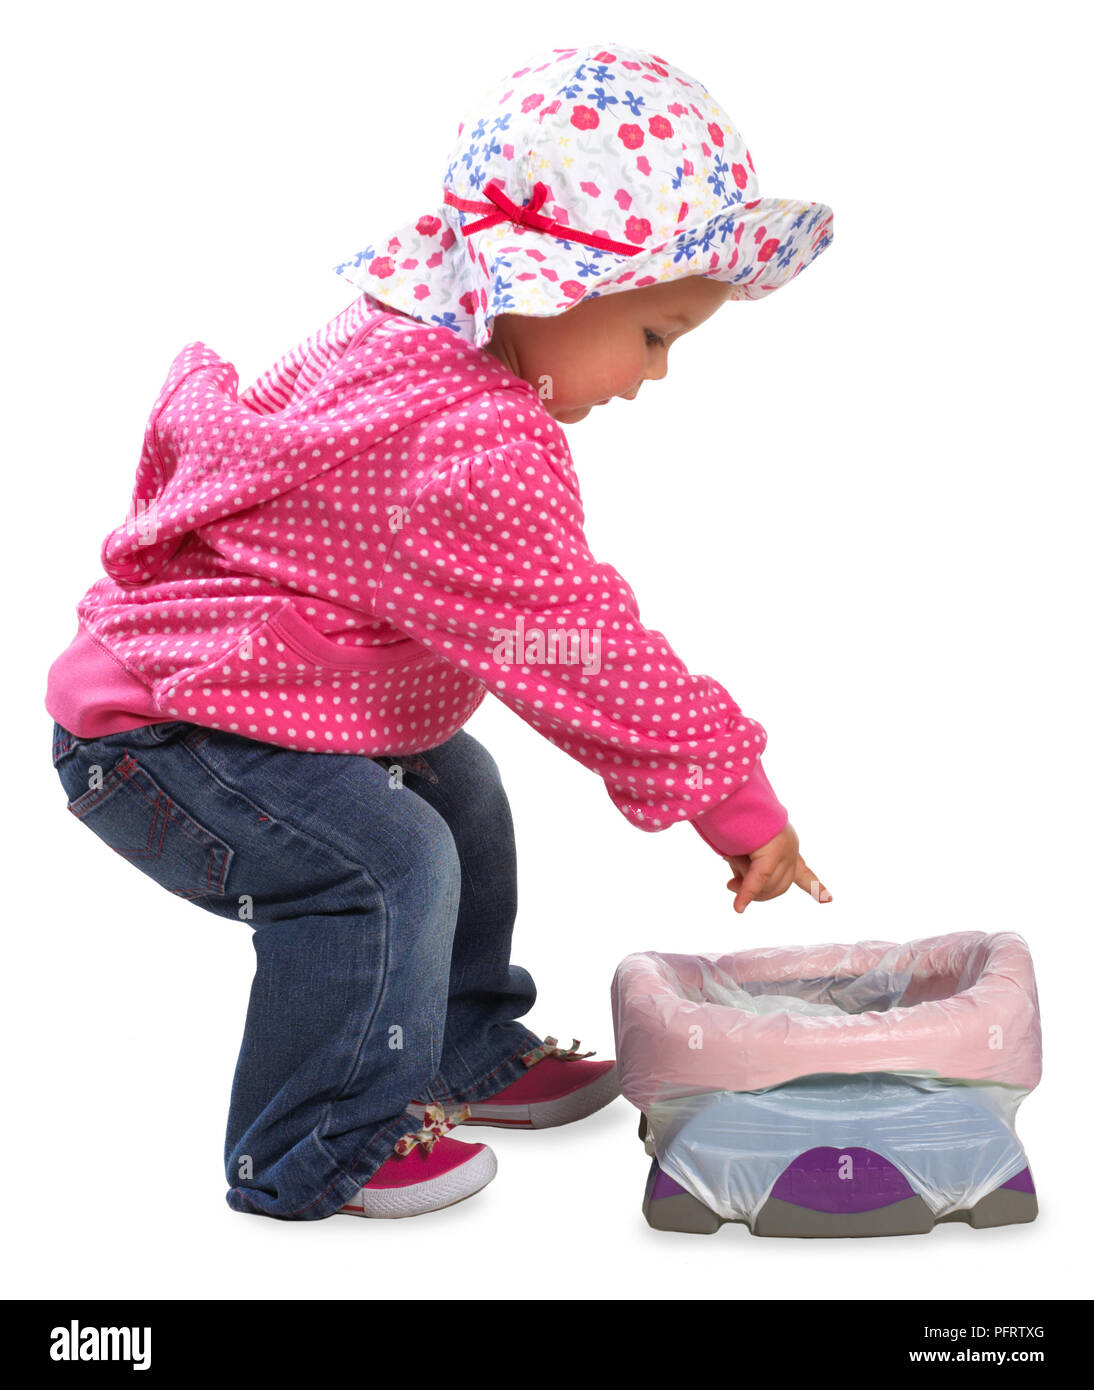 https://c8.alamy.com/compit/pfrtxg/il-toddler-girl-puntando-al-vasino-portatile-1-5-anni-pfrtxg.jpg